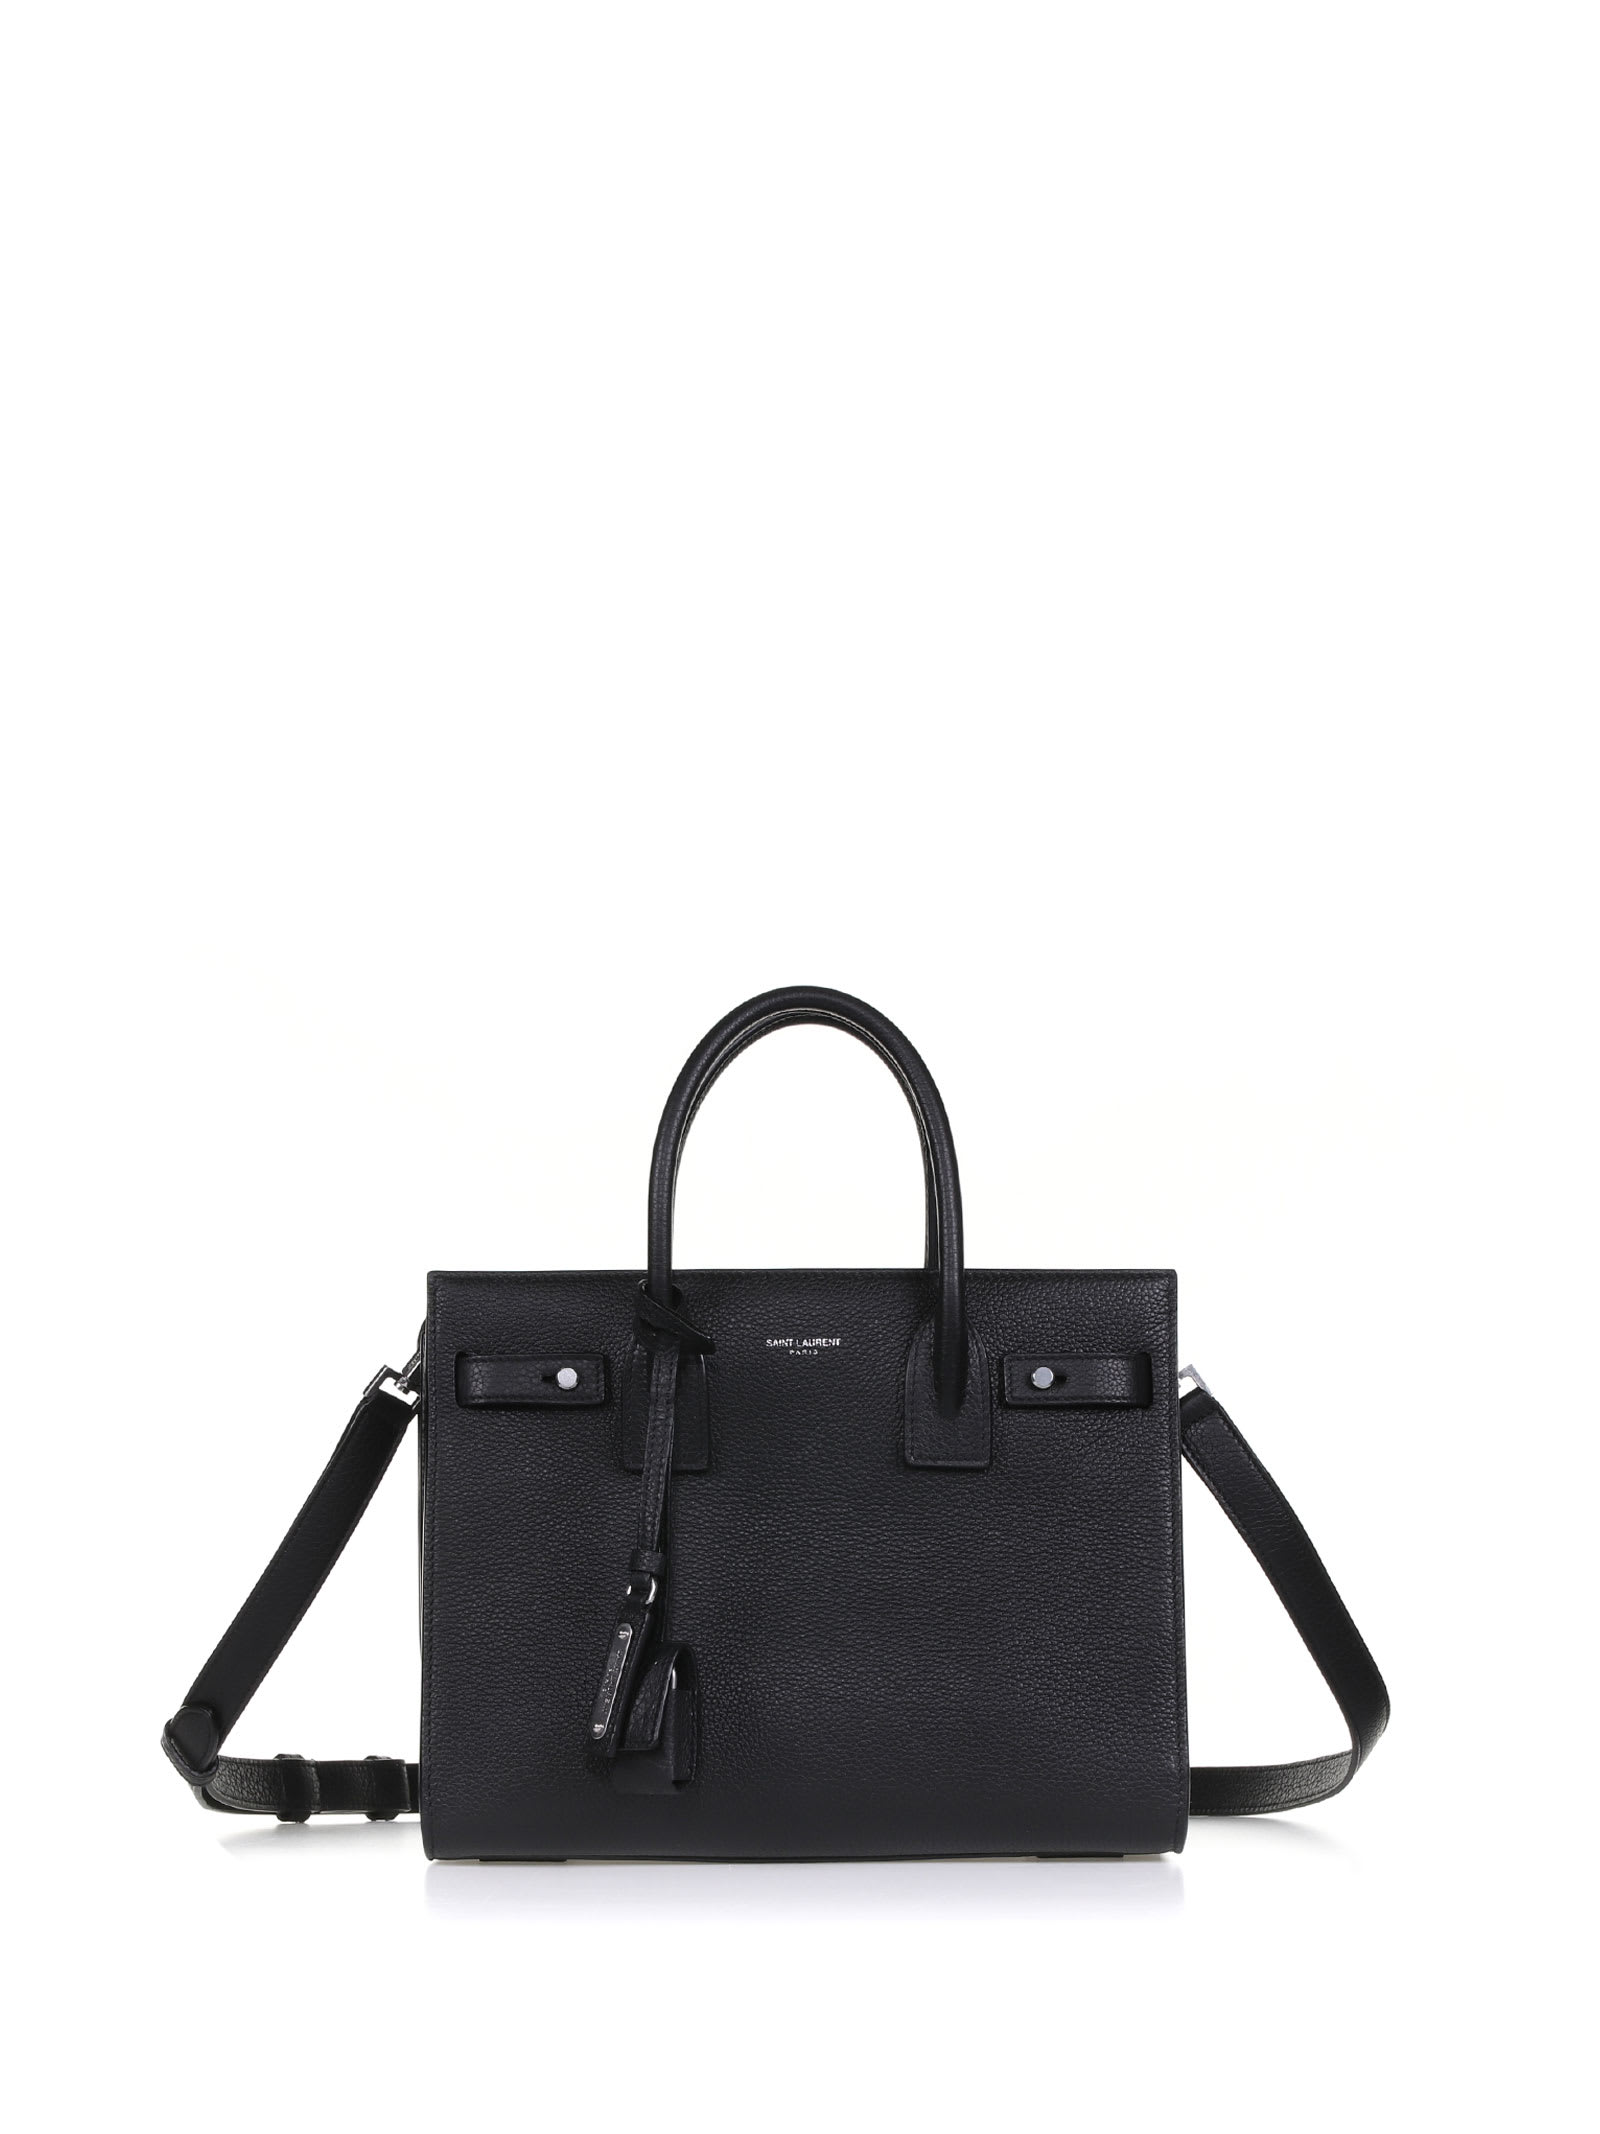 Saint Laurent Bag In Black Leather